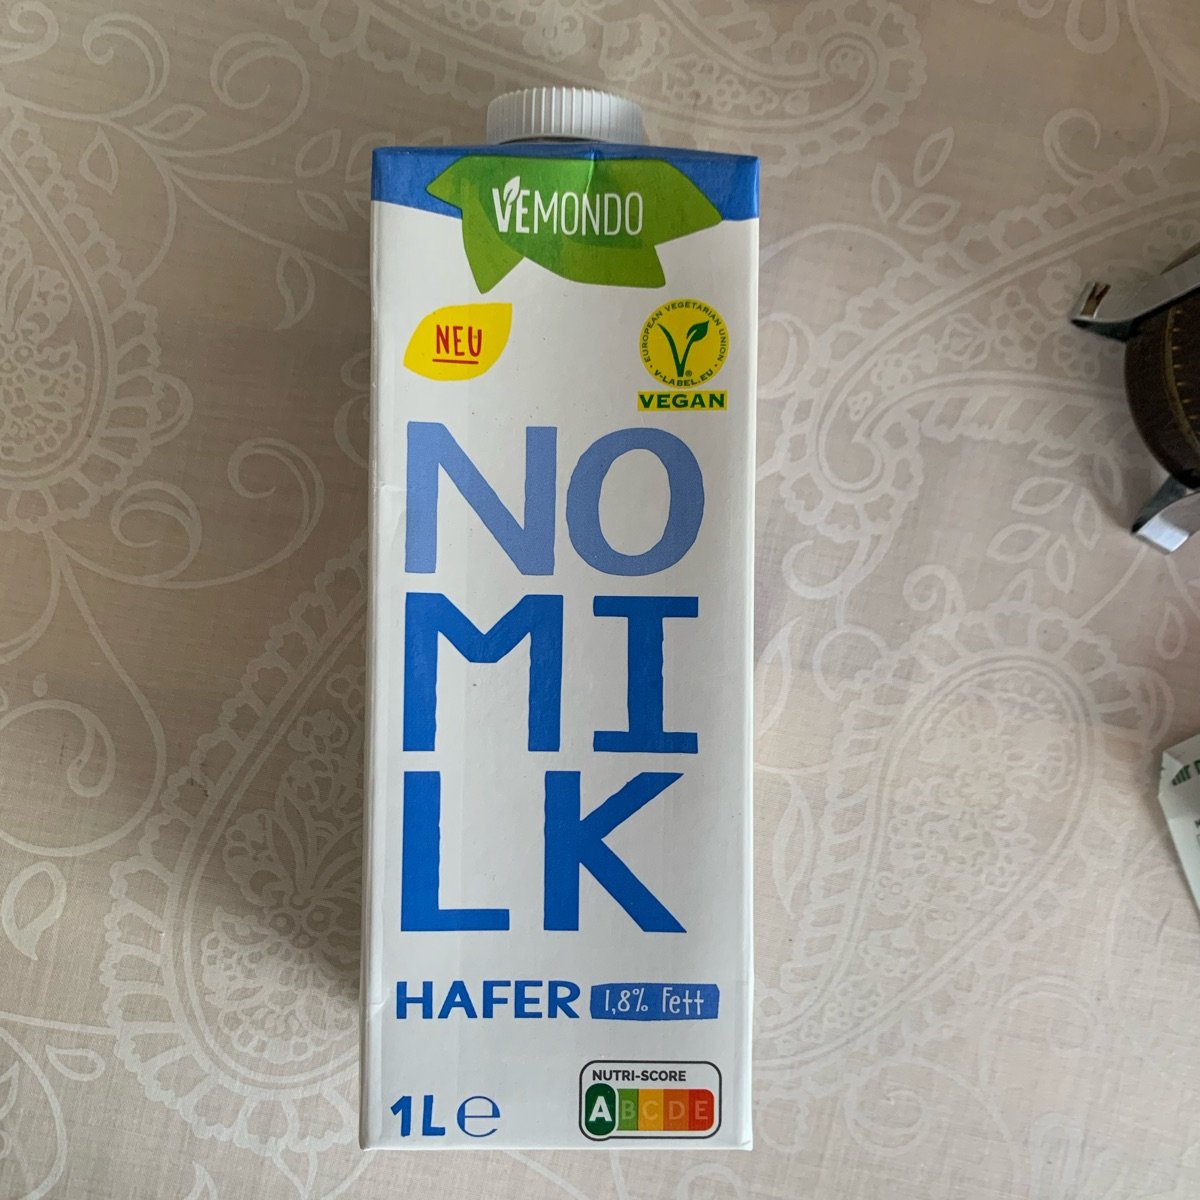 1,8% Vemondo milk | no Reviews abillion